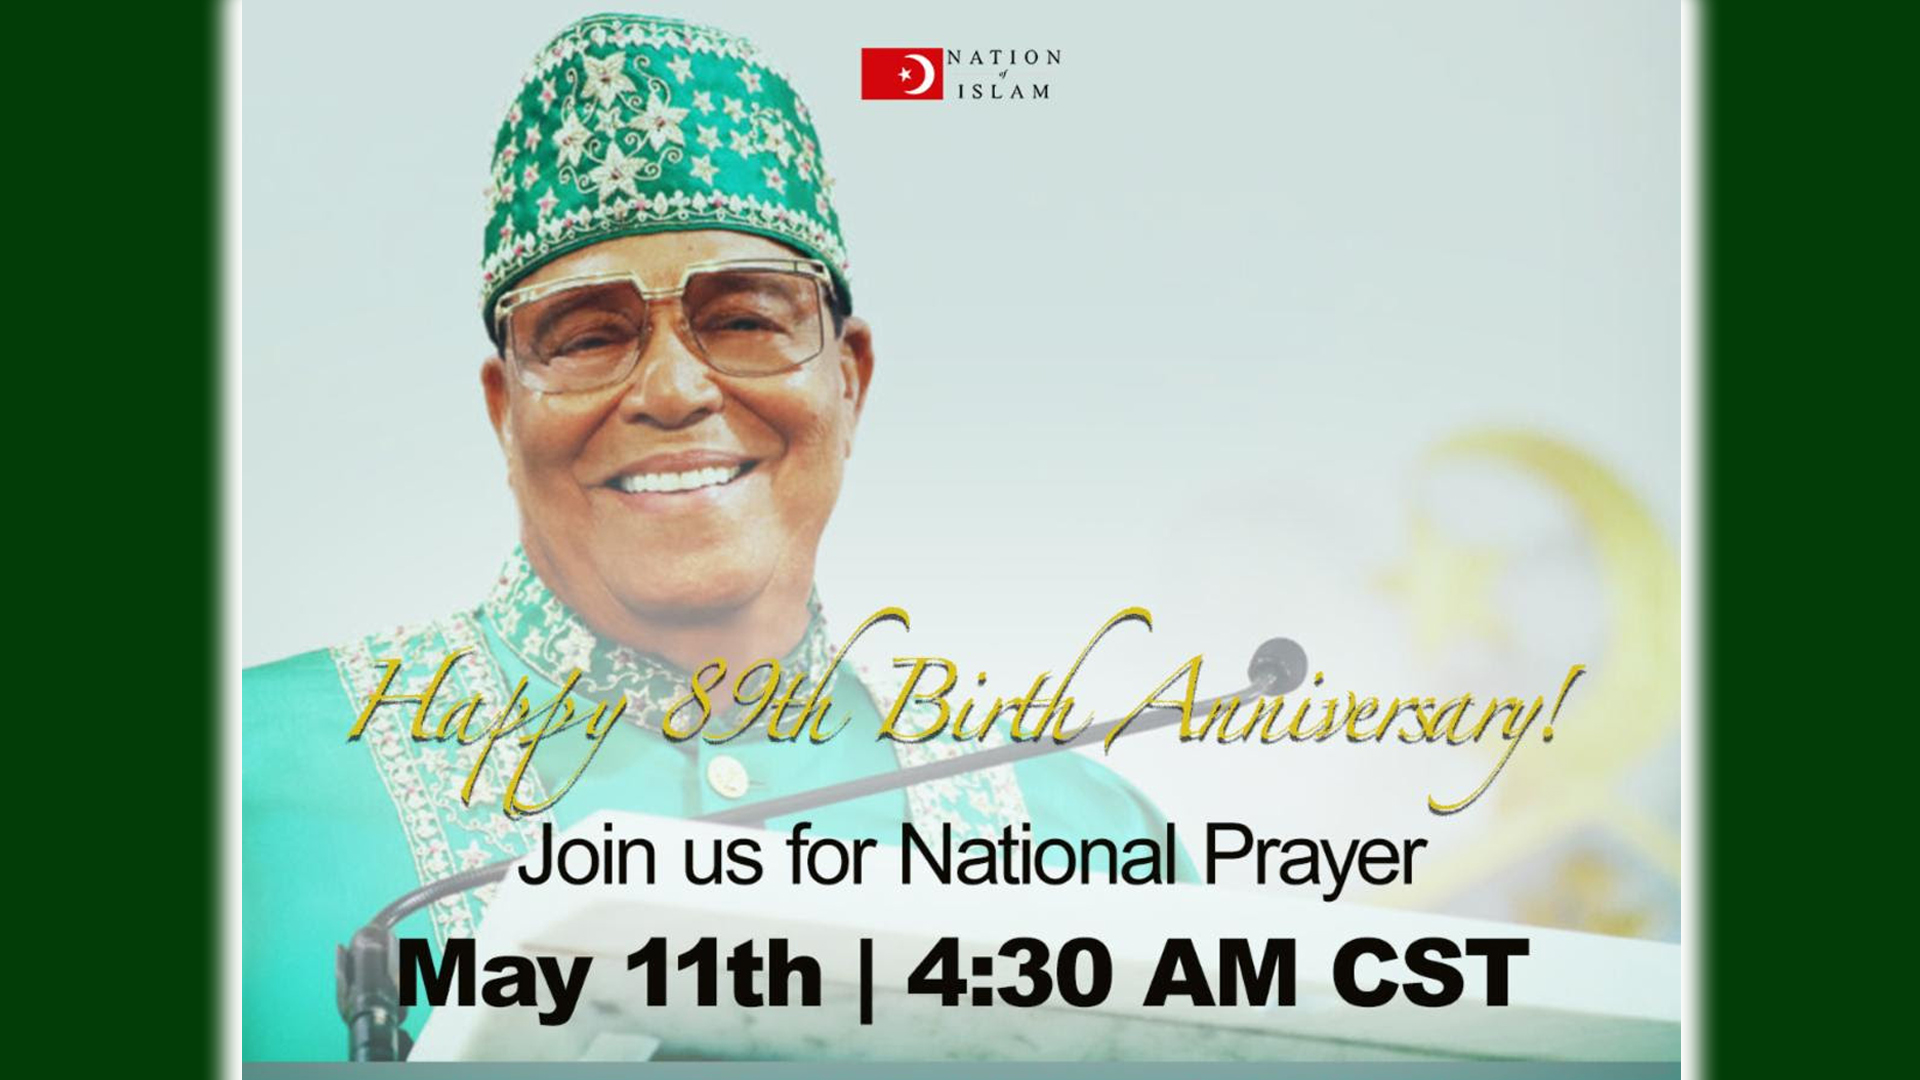 National Prayer: 89th Birth Anniversary of Minister Farrakhan